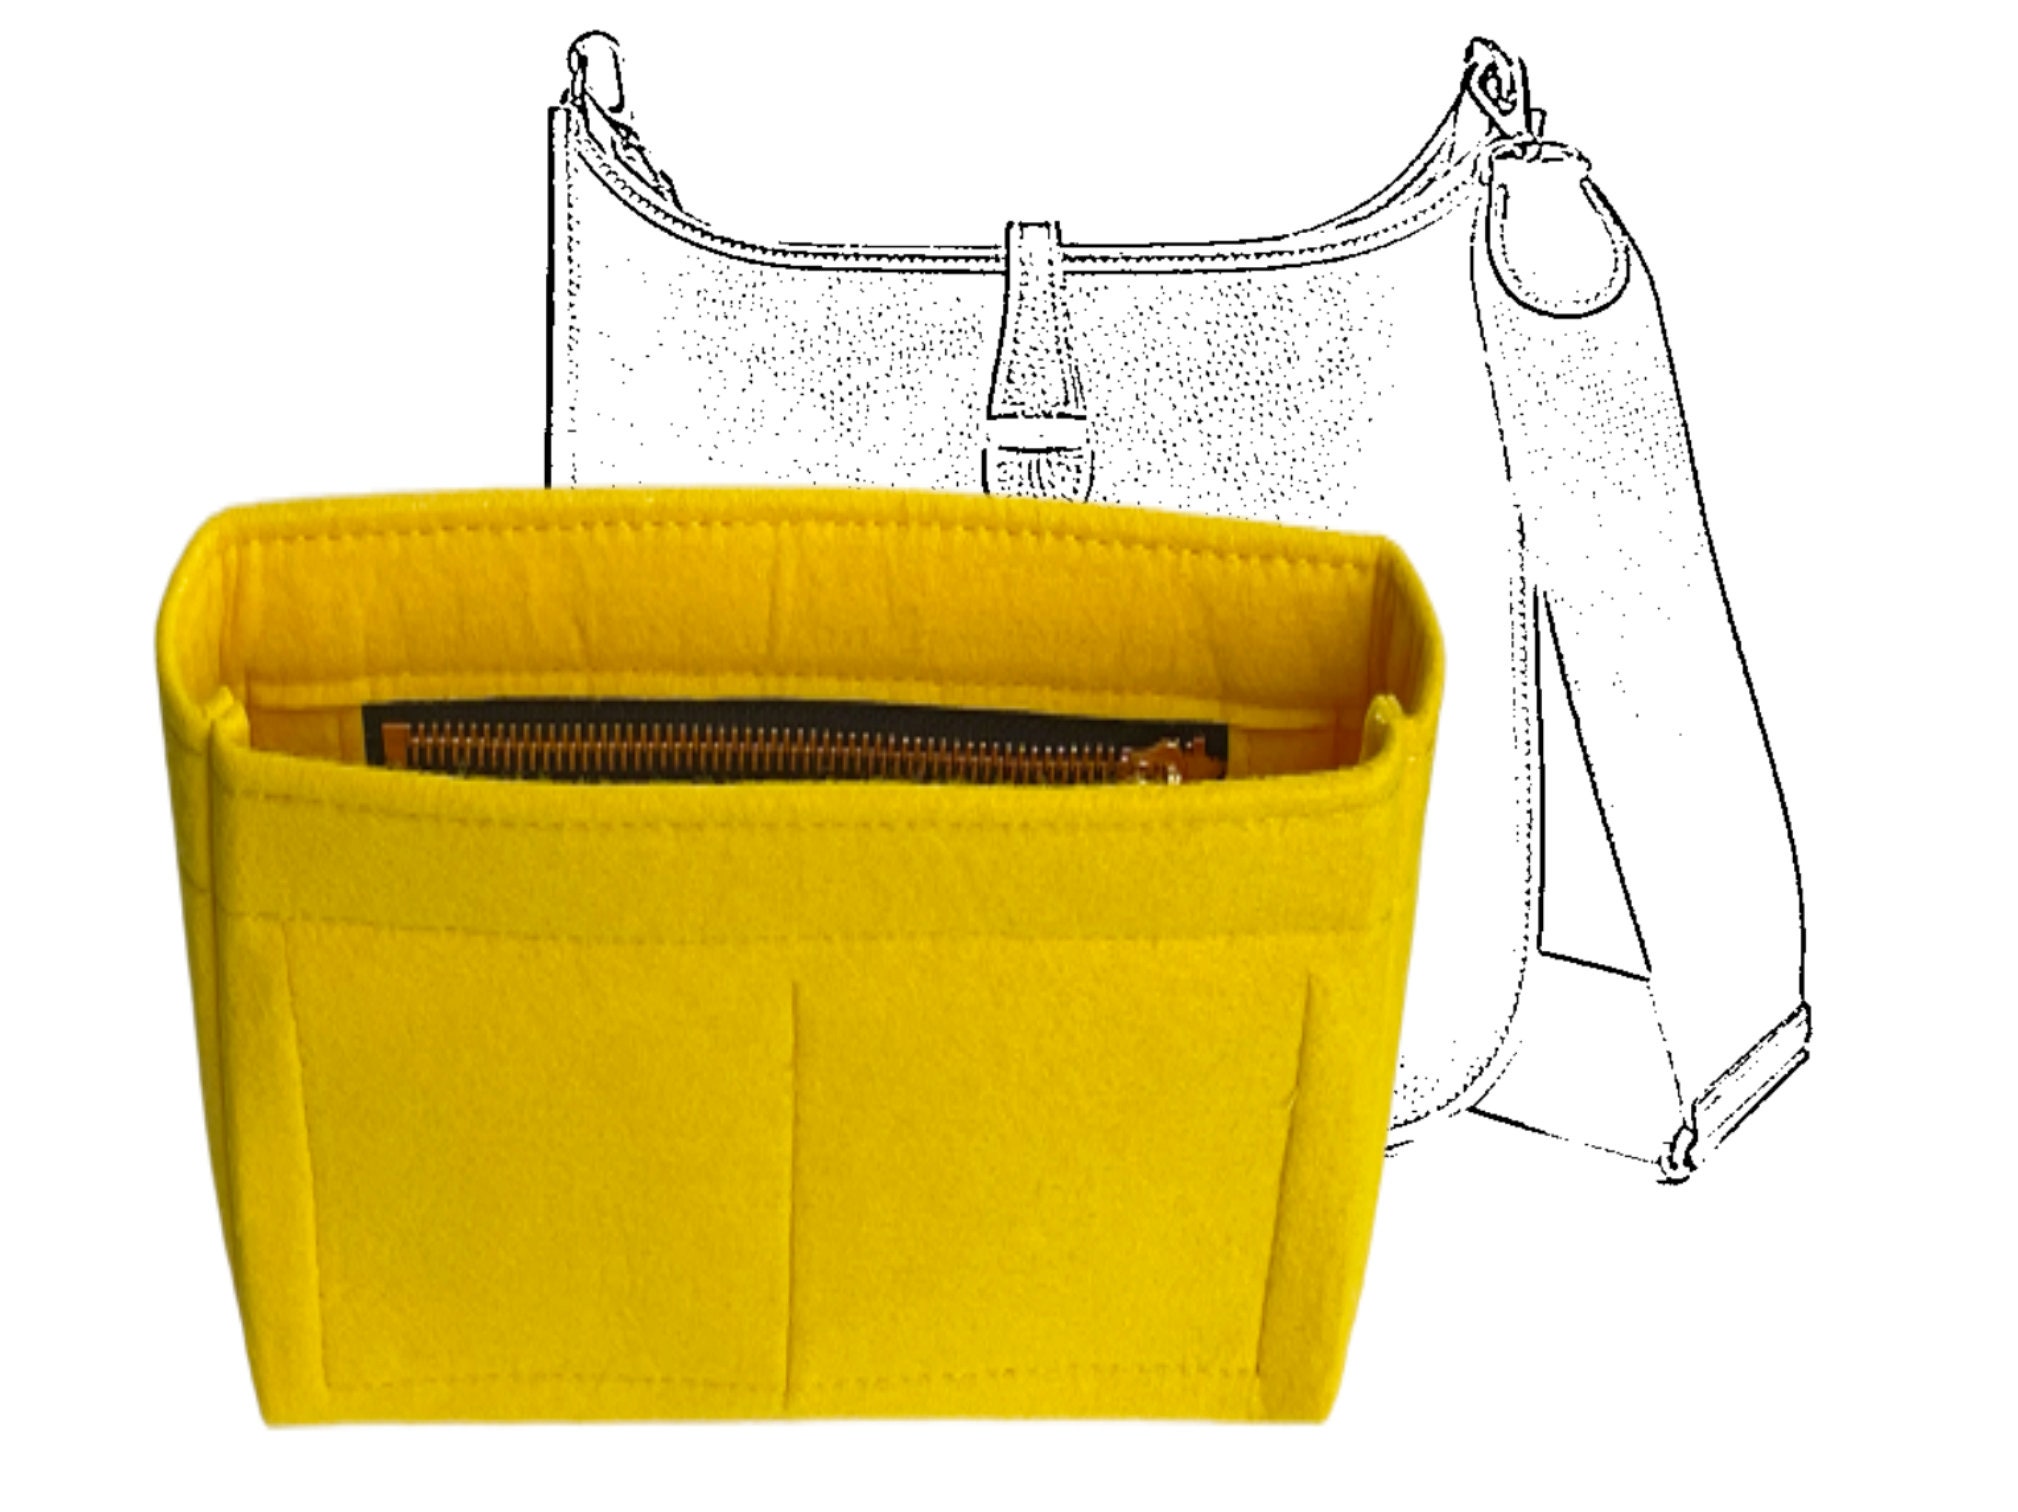  Bag Insert Bag Organiser for Hermes Cabasellier 31 (Beige) :  Clothing, Shoes & Jewelry